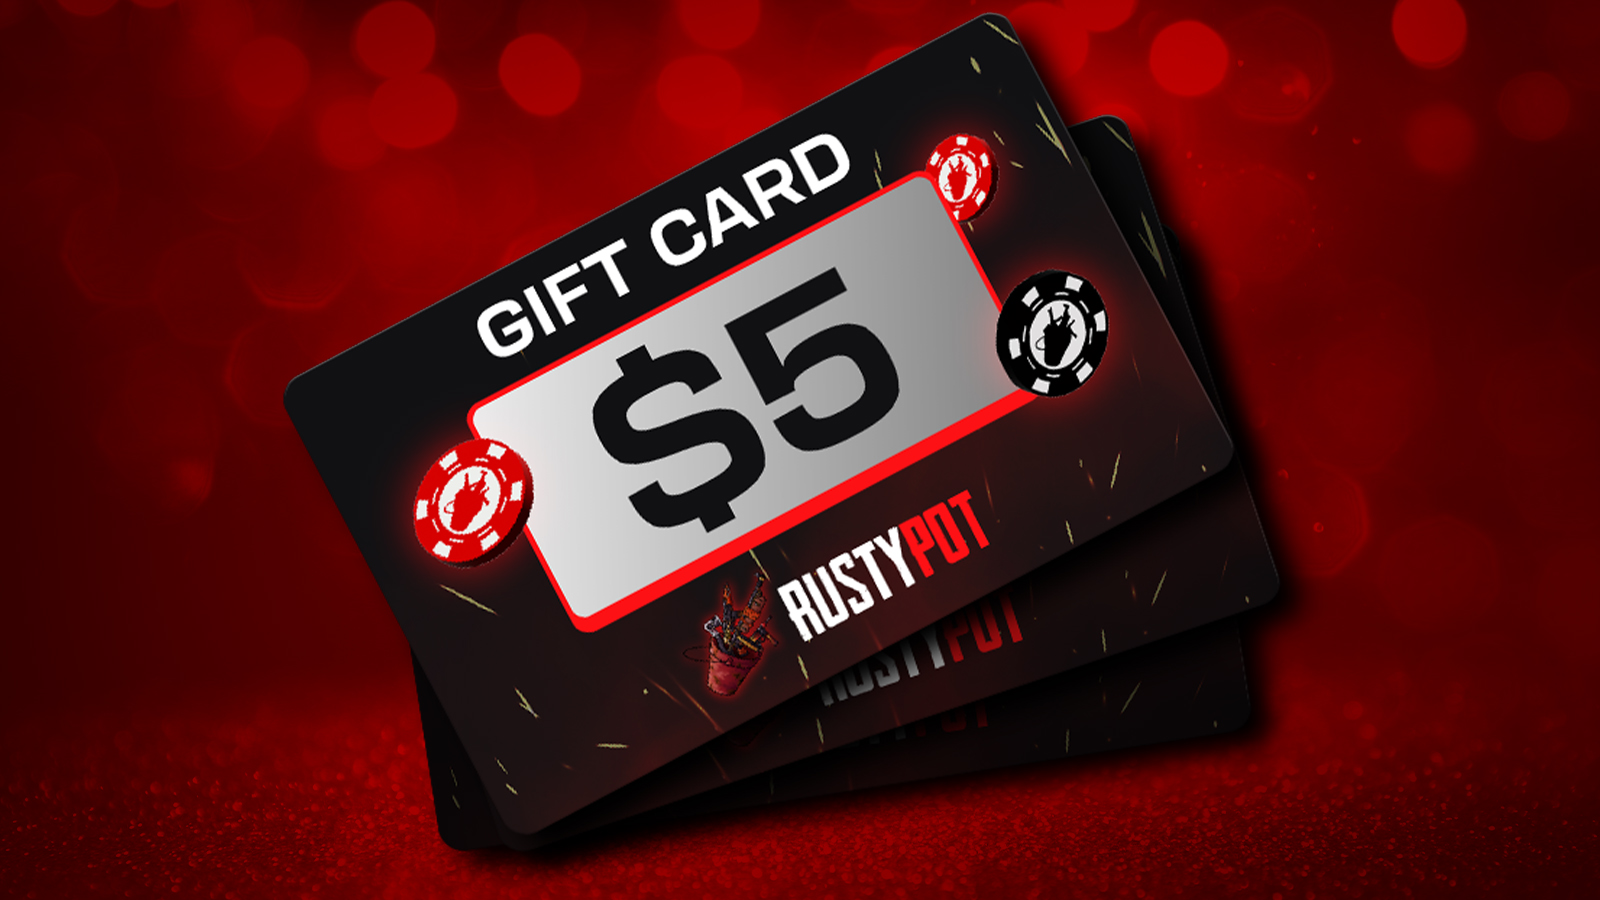 [$ 5.25] RustyPot $5 Grub Bucks Giftcard